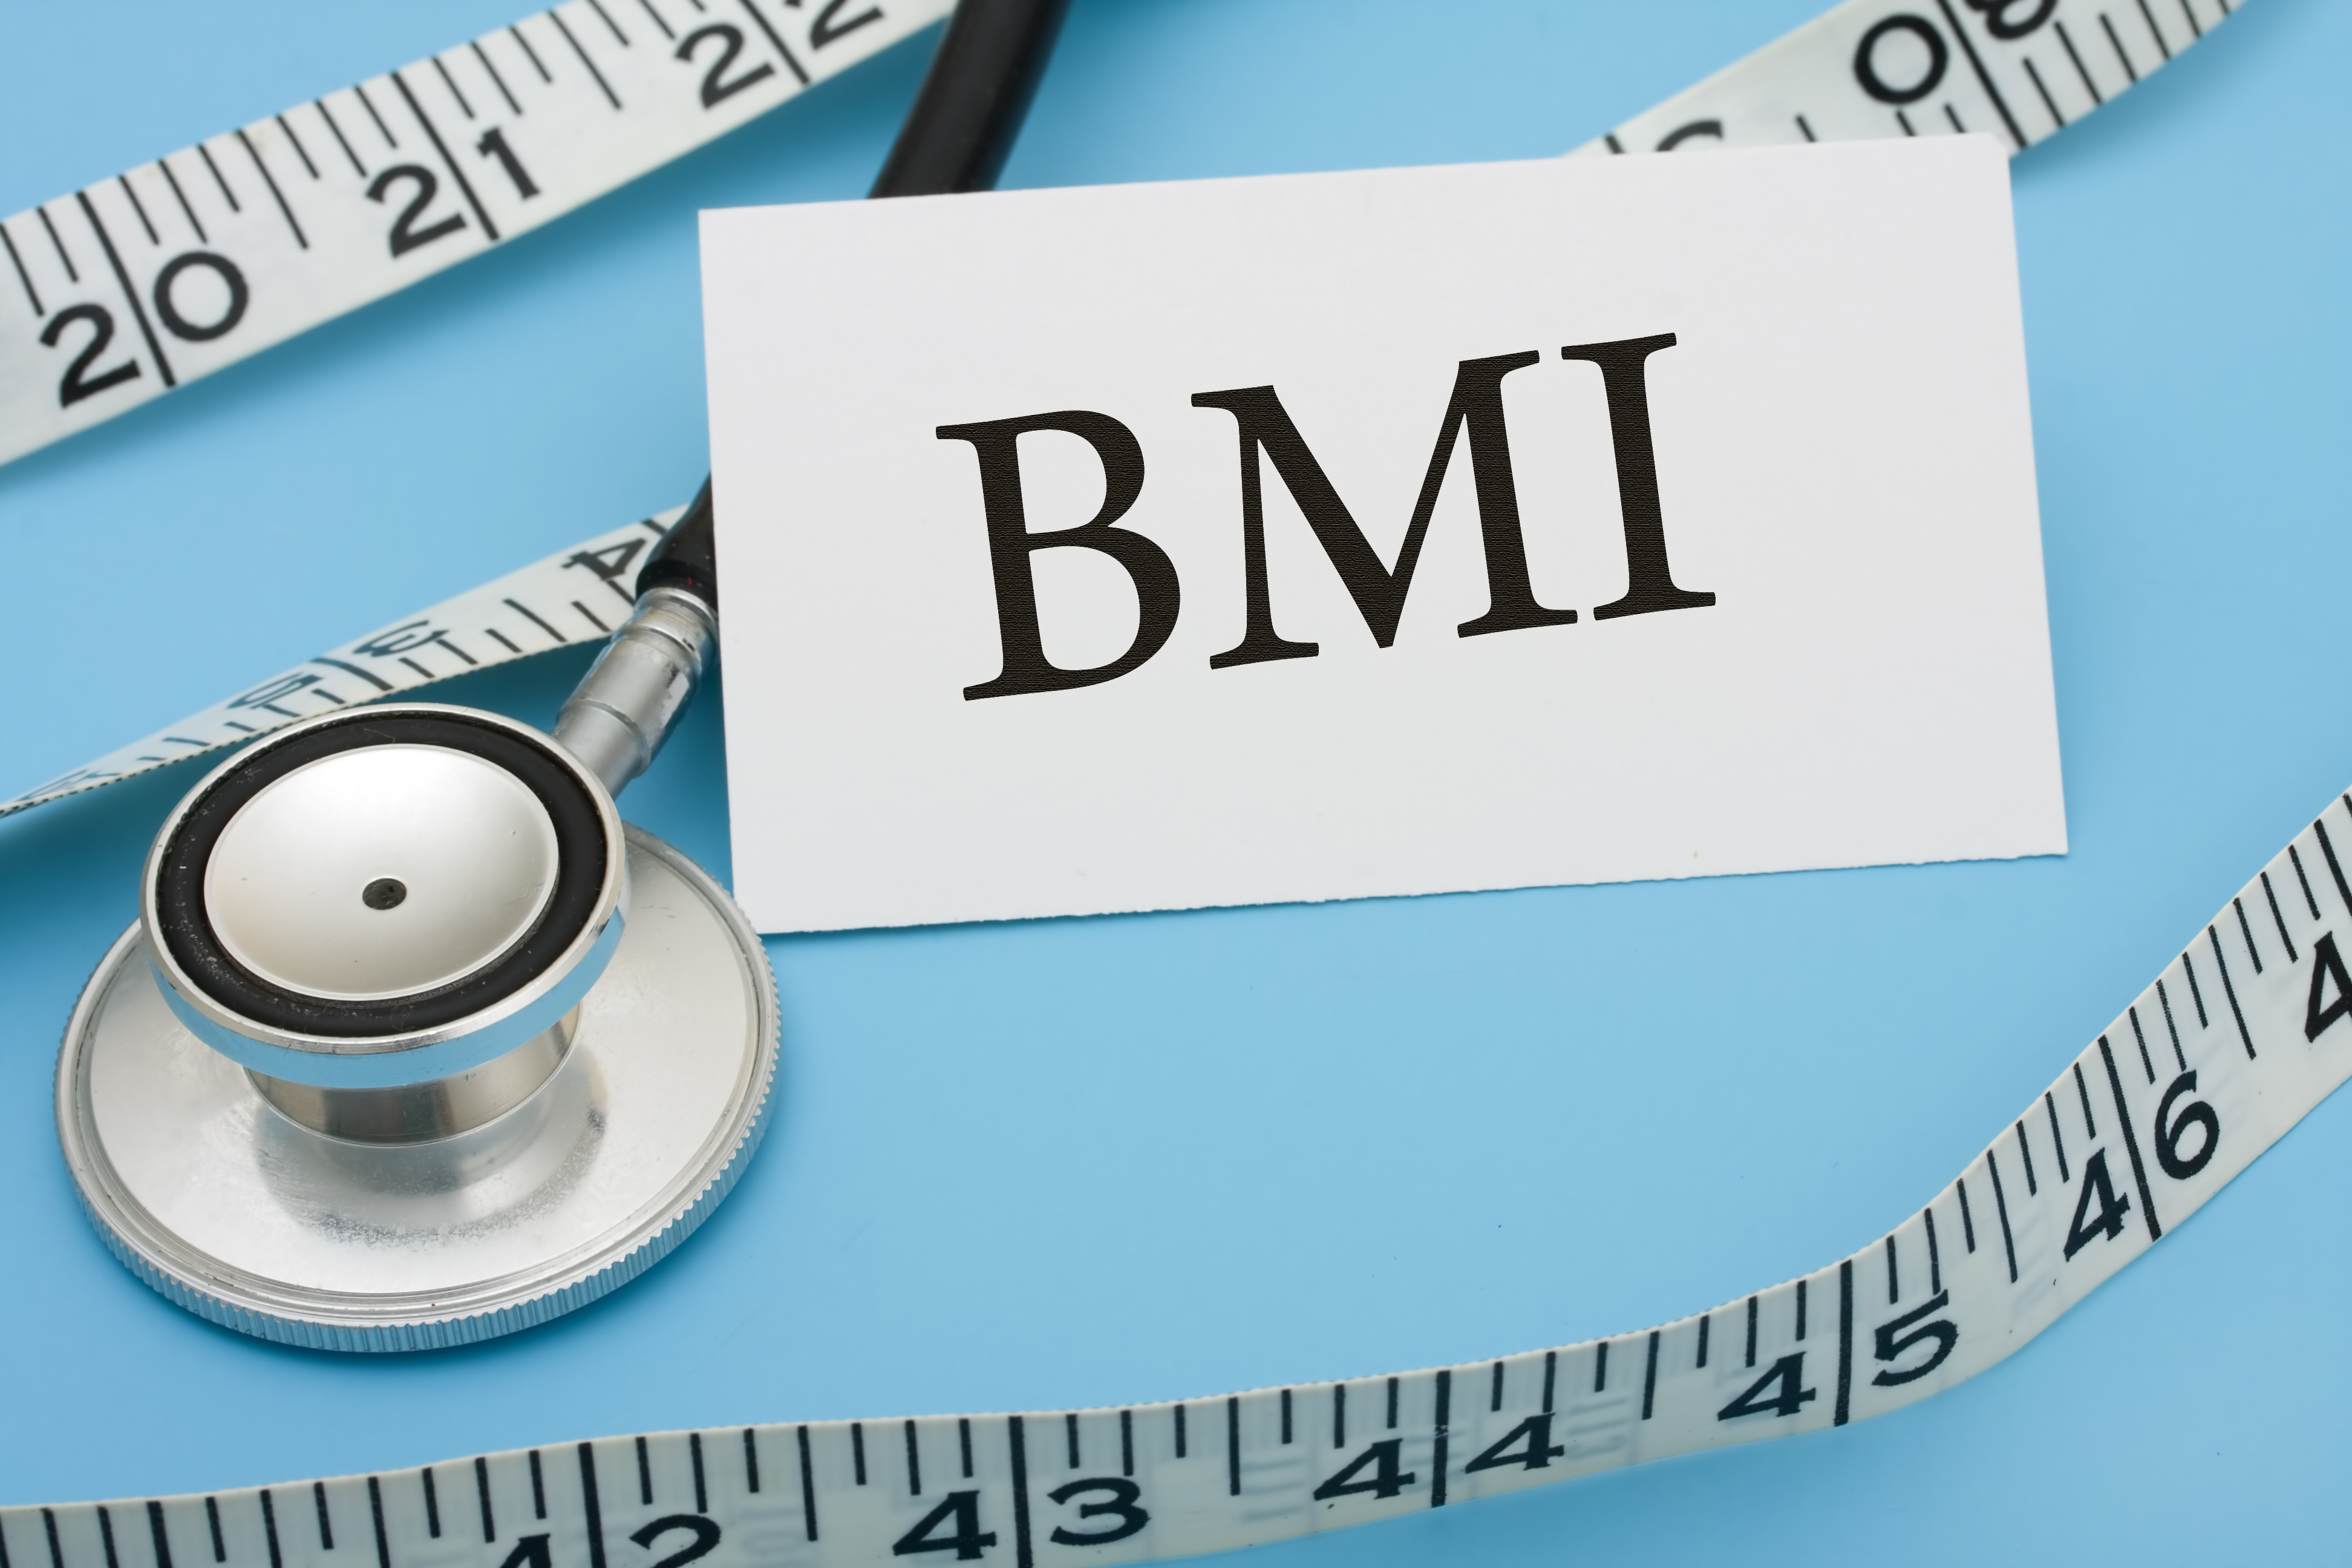 “BMI